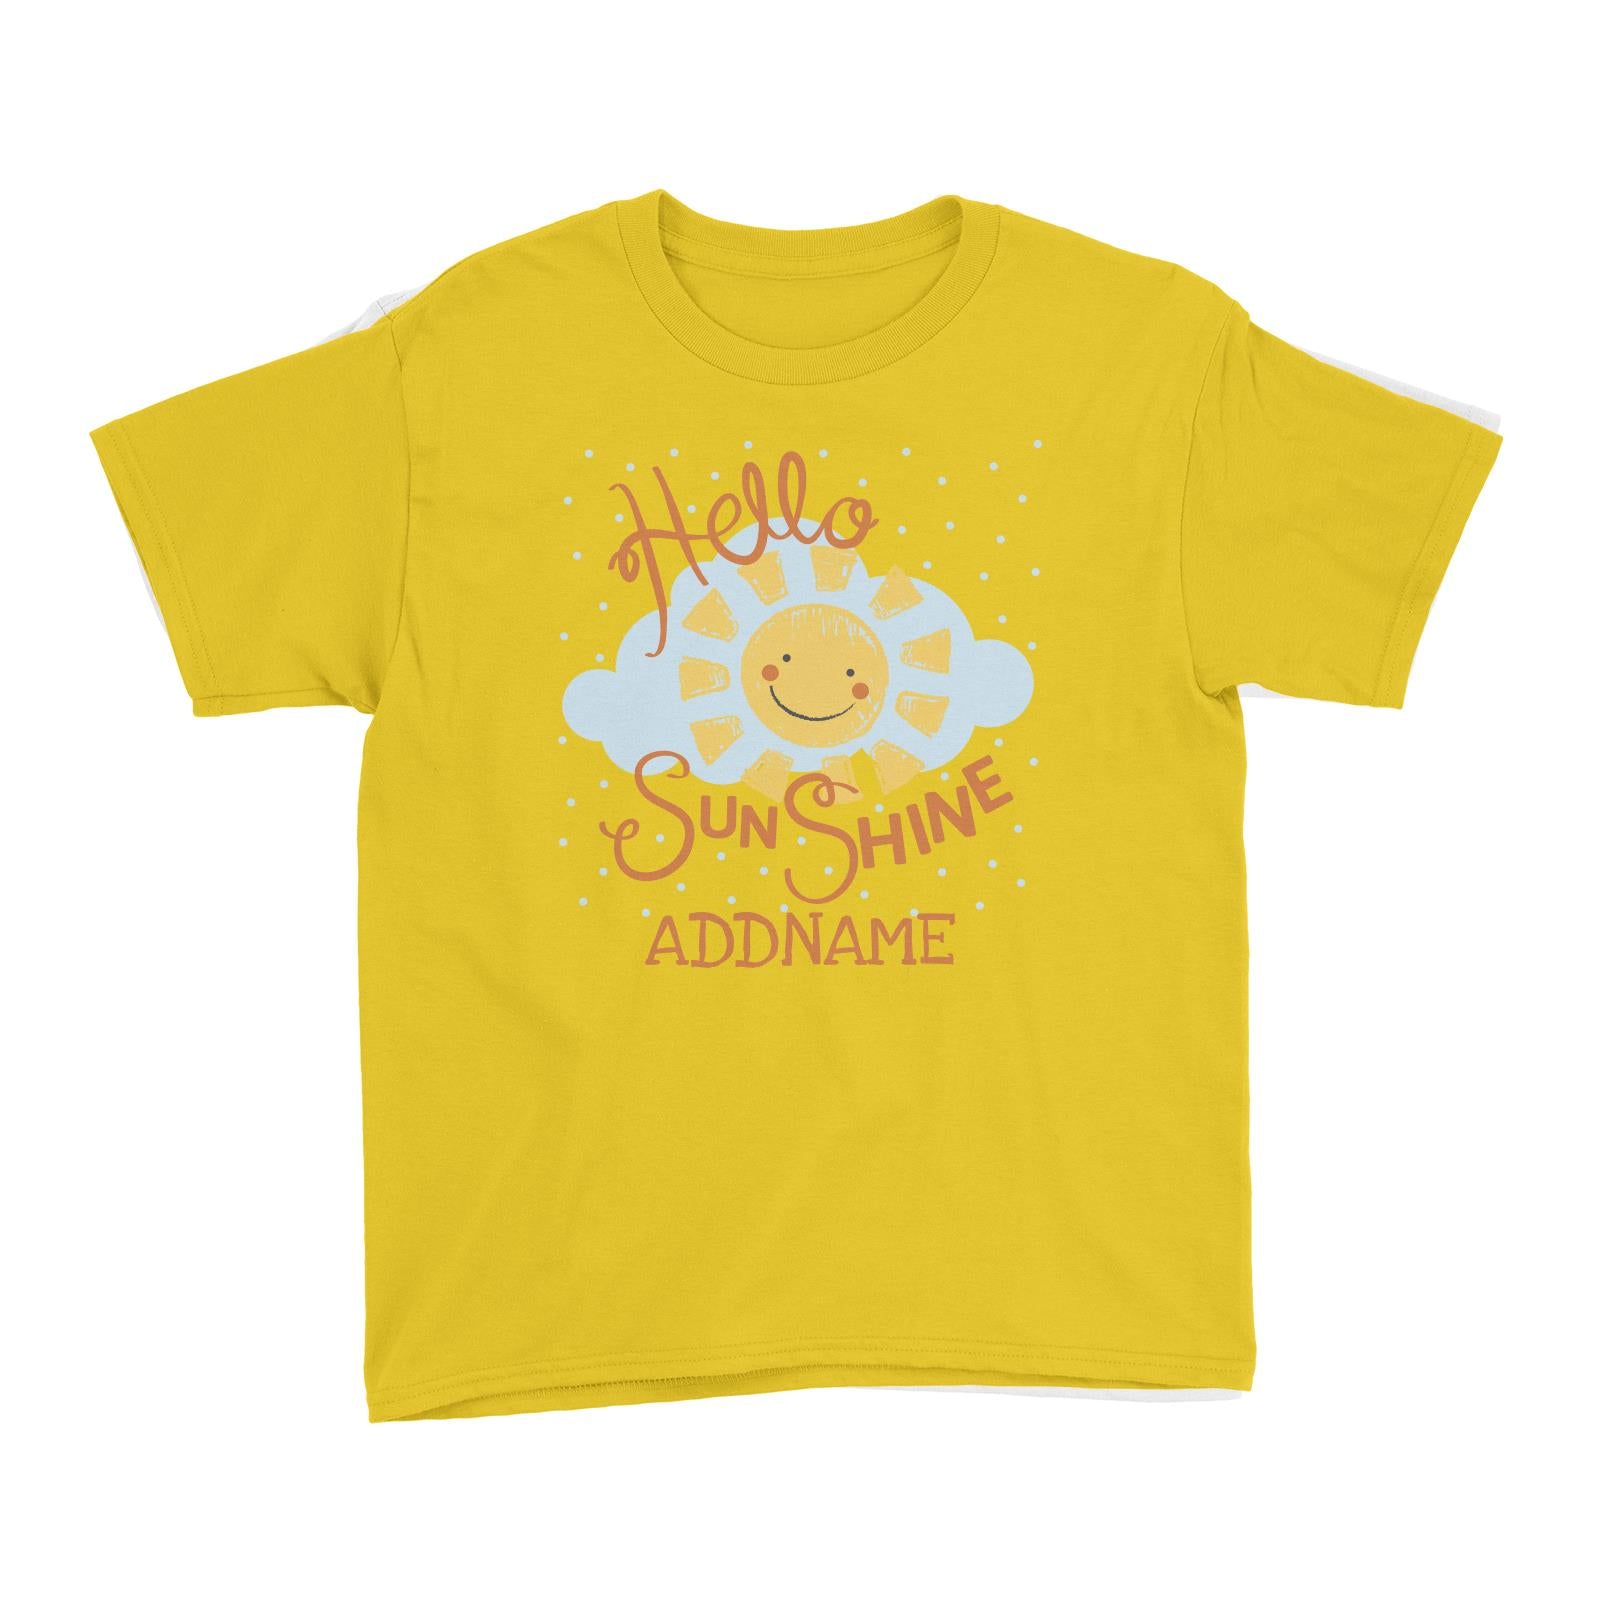 Hello Sunshine Addname Kid's T-Shirt